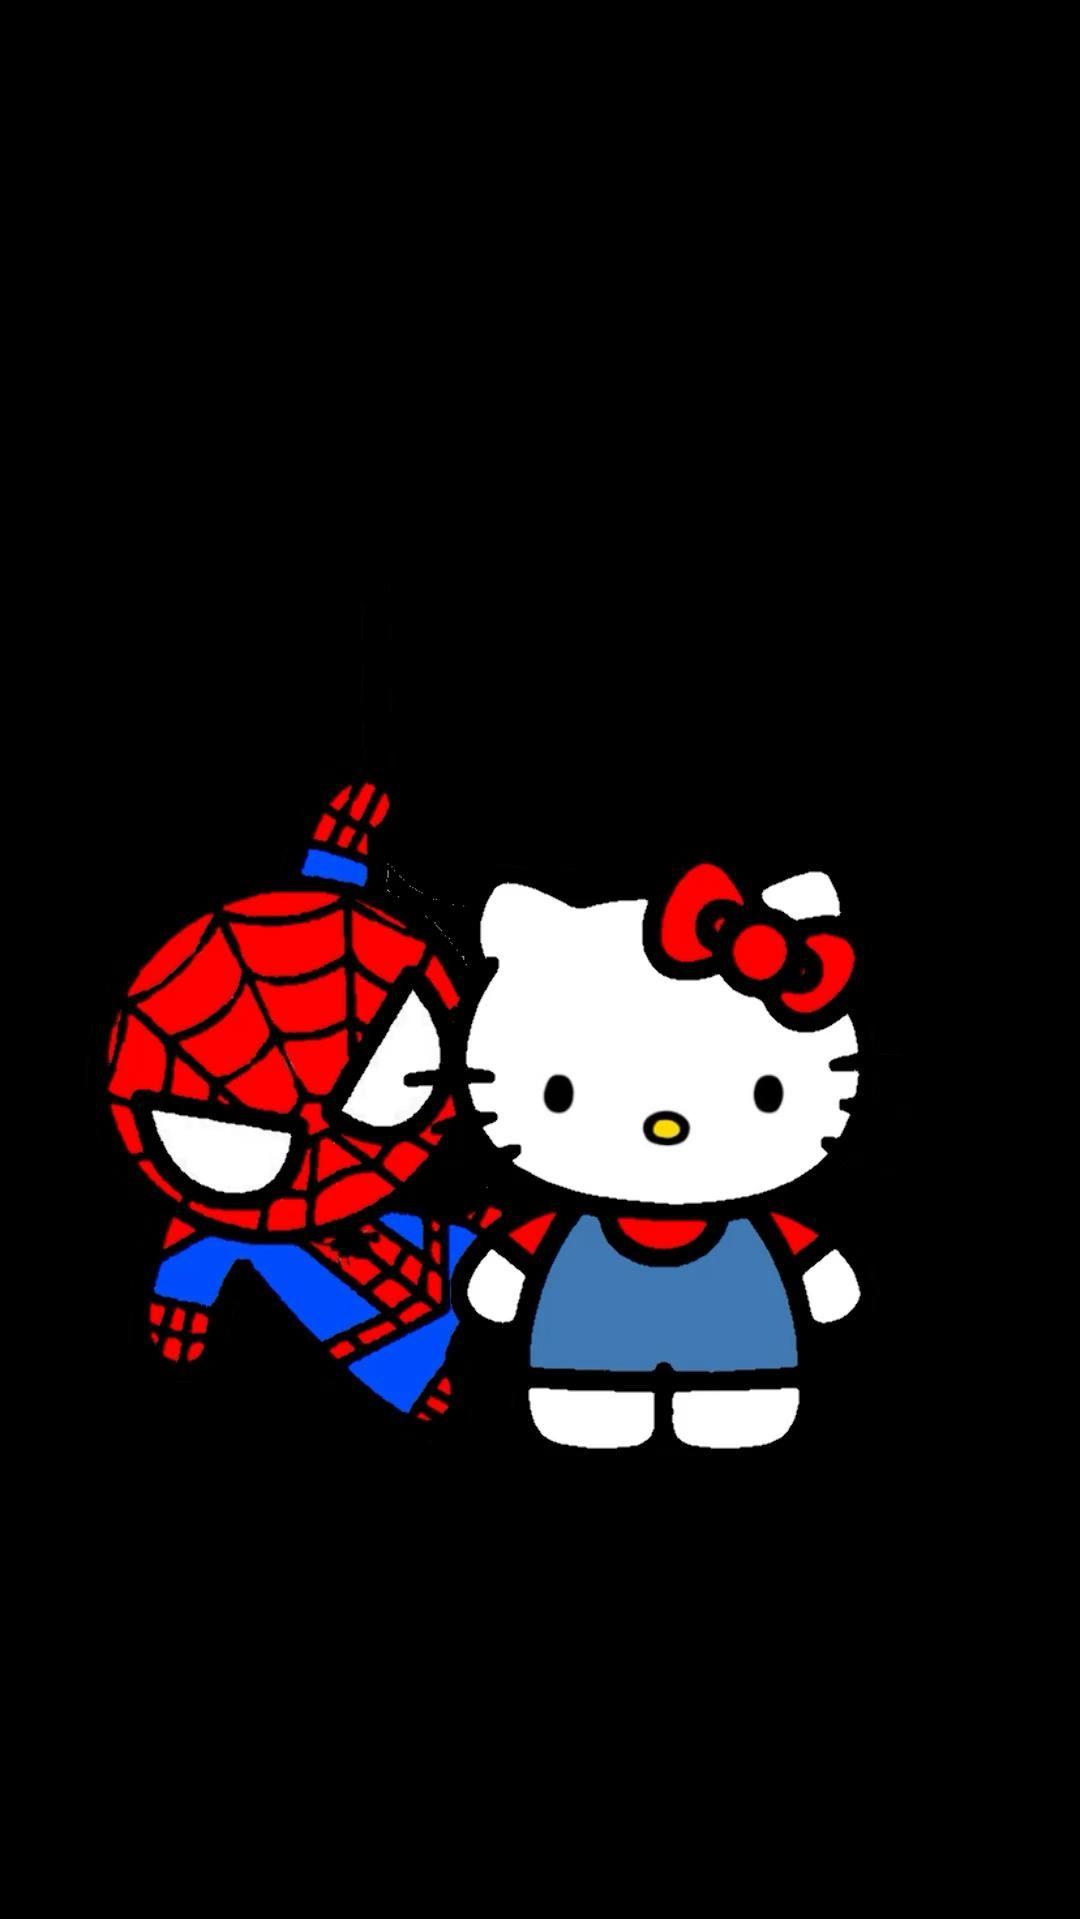 Spider Man Hello Kitty Wallpaper In